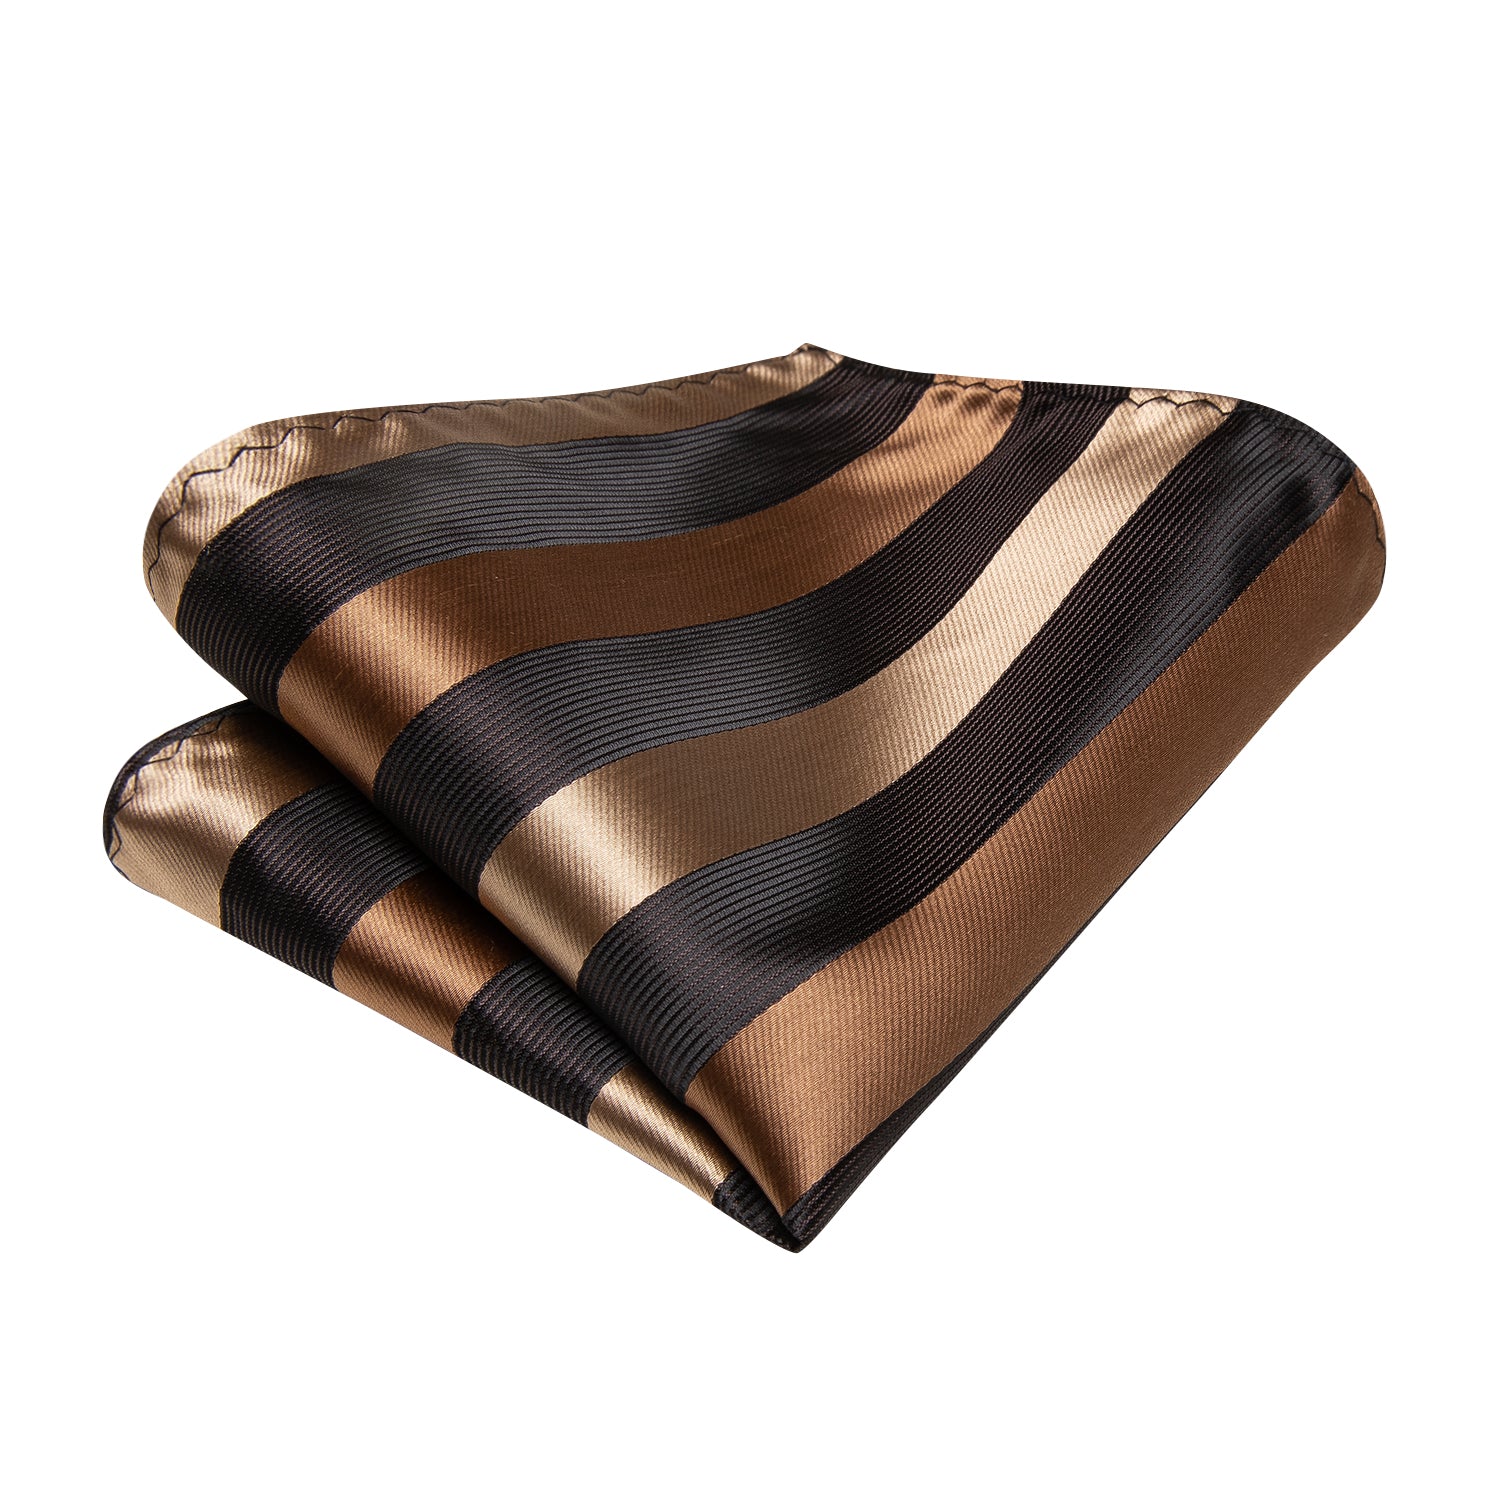 New Brown Golden Strip Self-tied Bow Tie Pocket Square Cufflinks Set